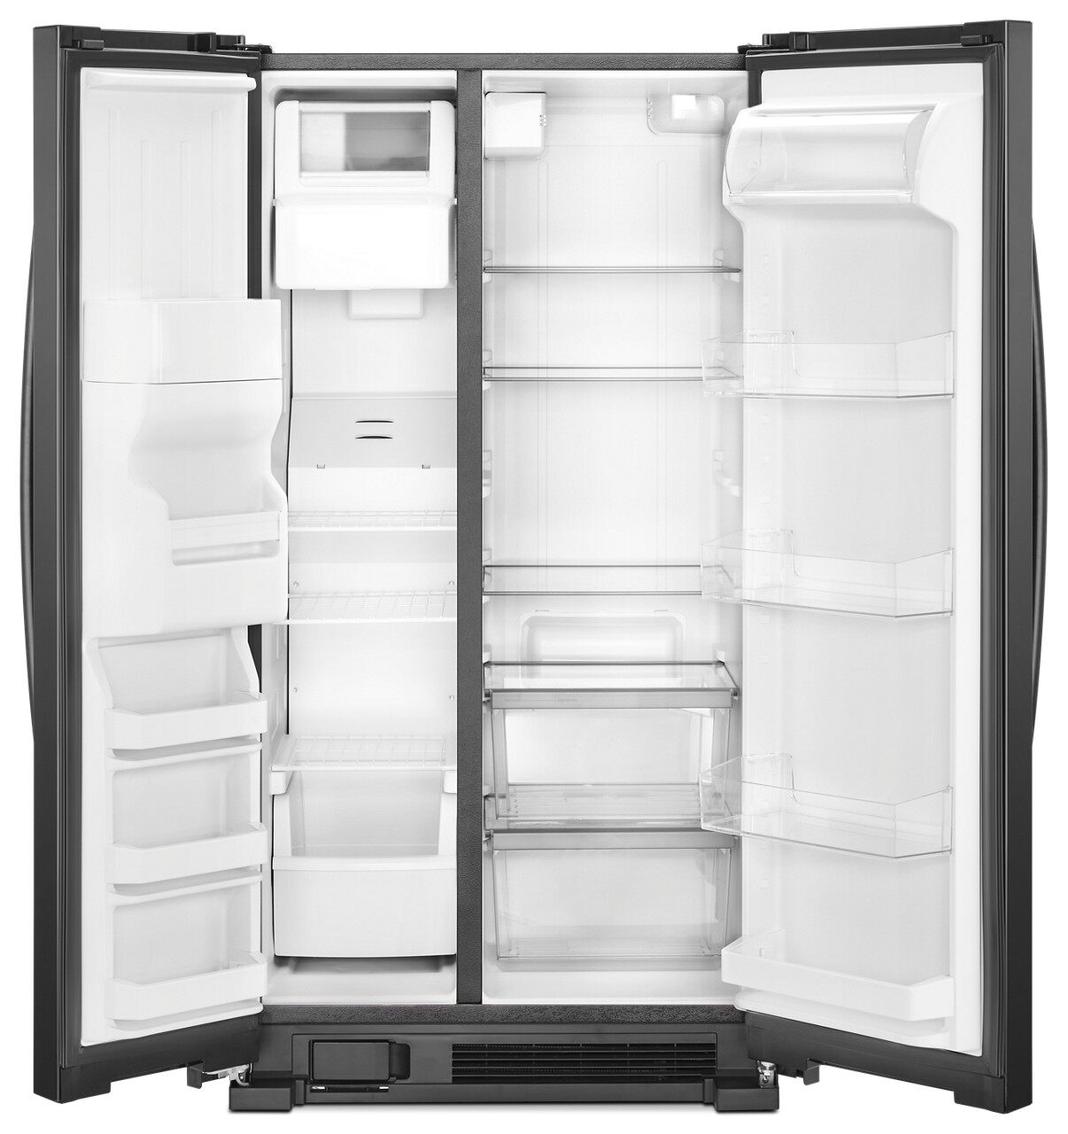 Whirlpool - 35.88 Inch 25 cu. ft Side by Side Refrigerator in Black (Open Box) - WRS335SDHB